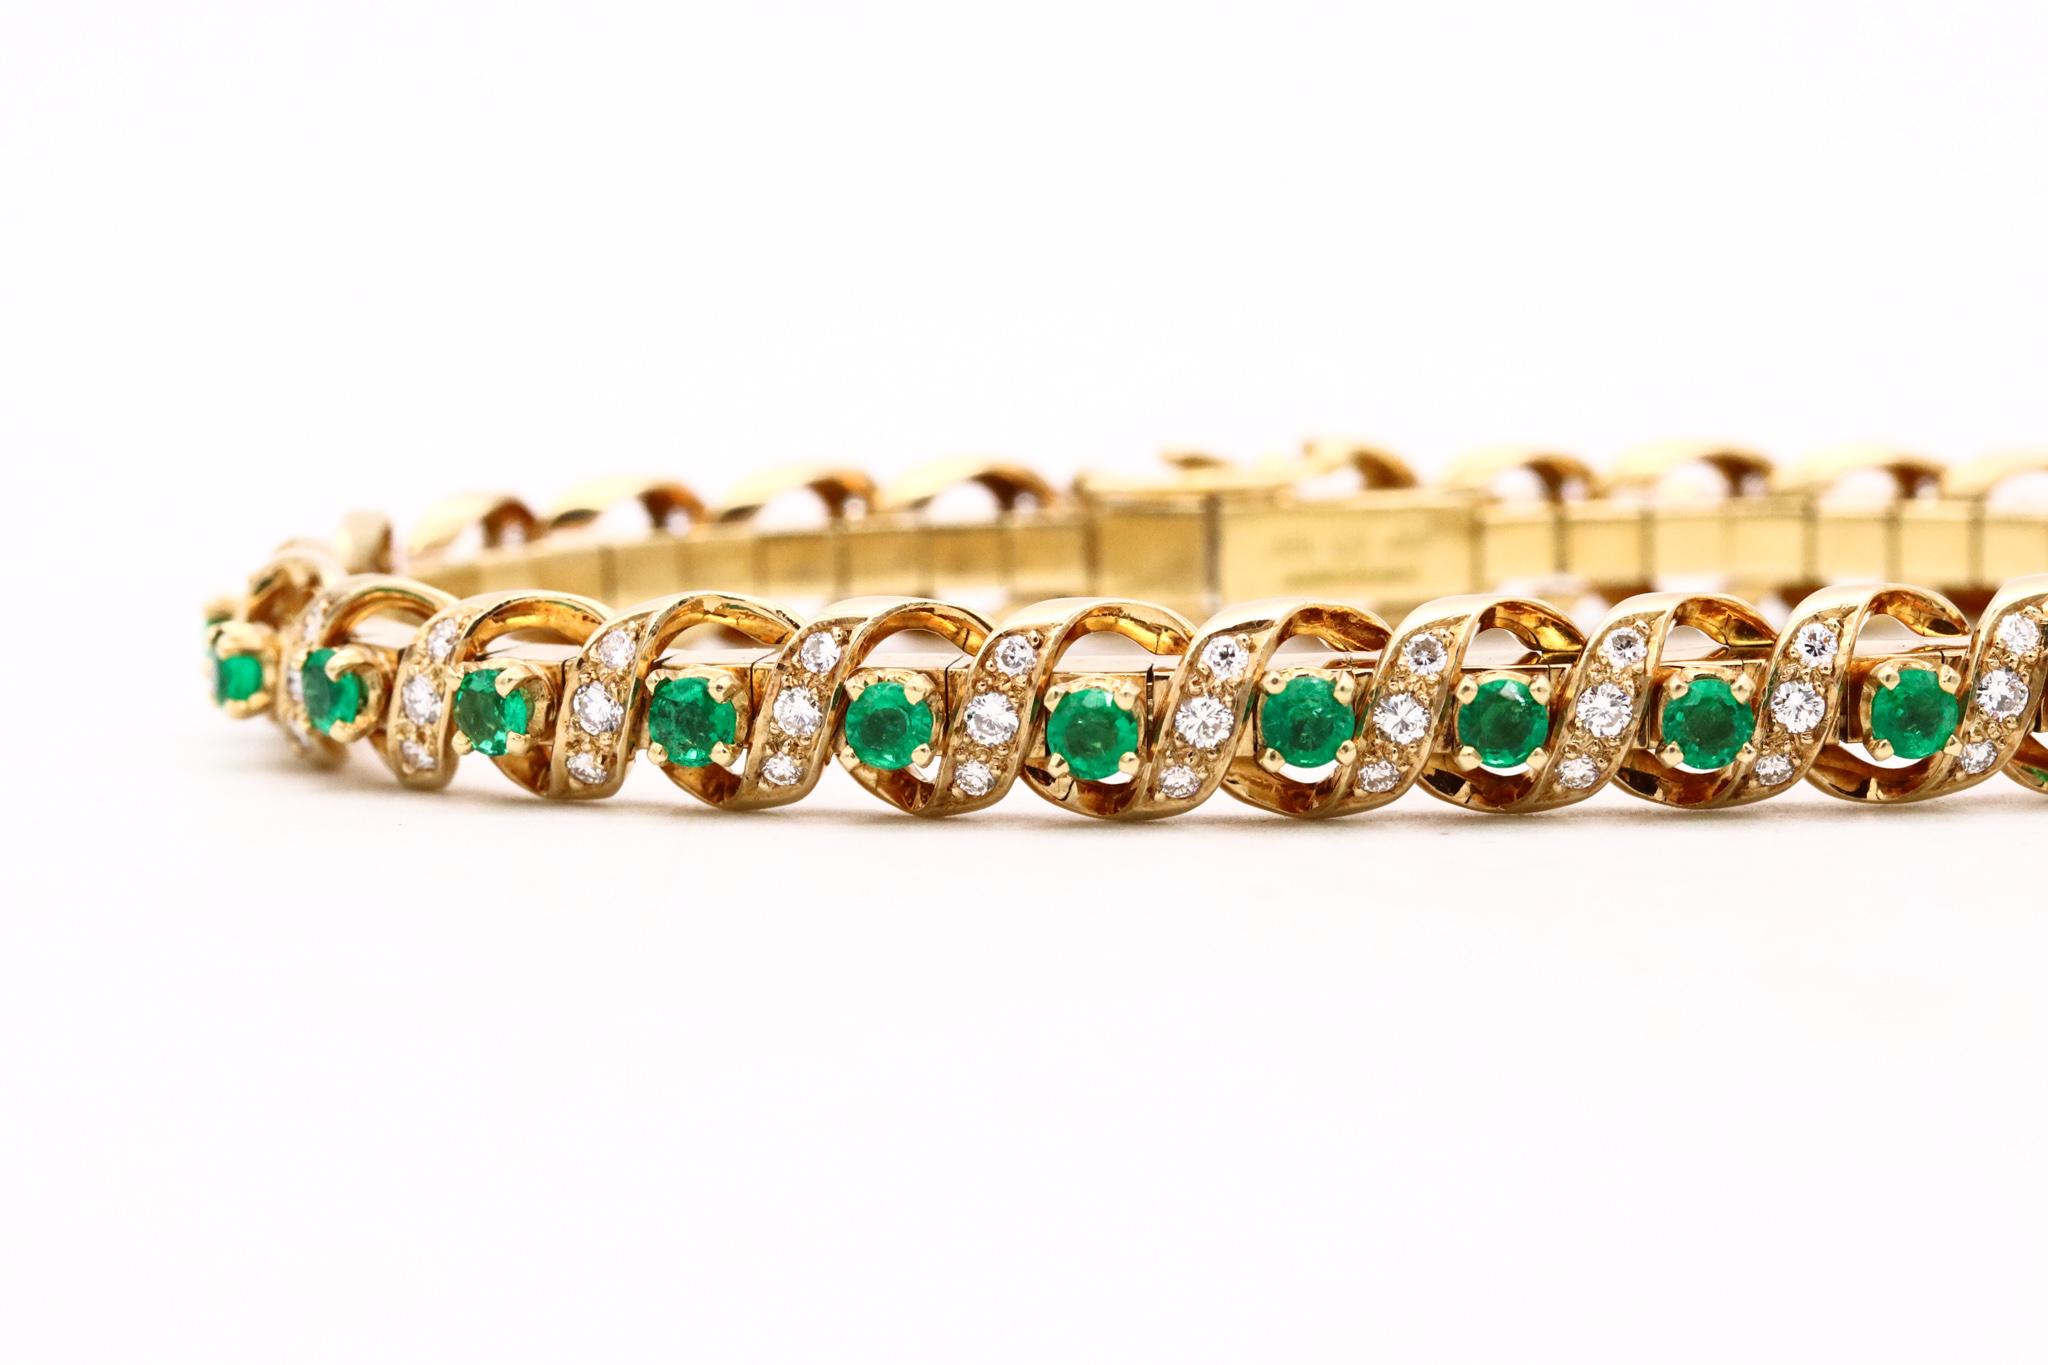 Gubelin 1960 Swiss 18kt Gold Bracelet 4.64 Ctw Colombian Emeralds and Diamonds For Sale 1